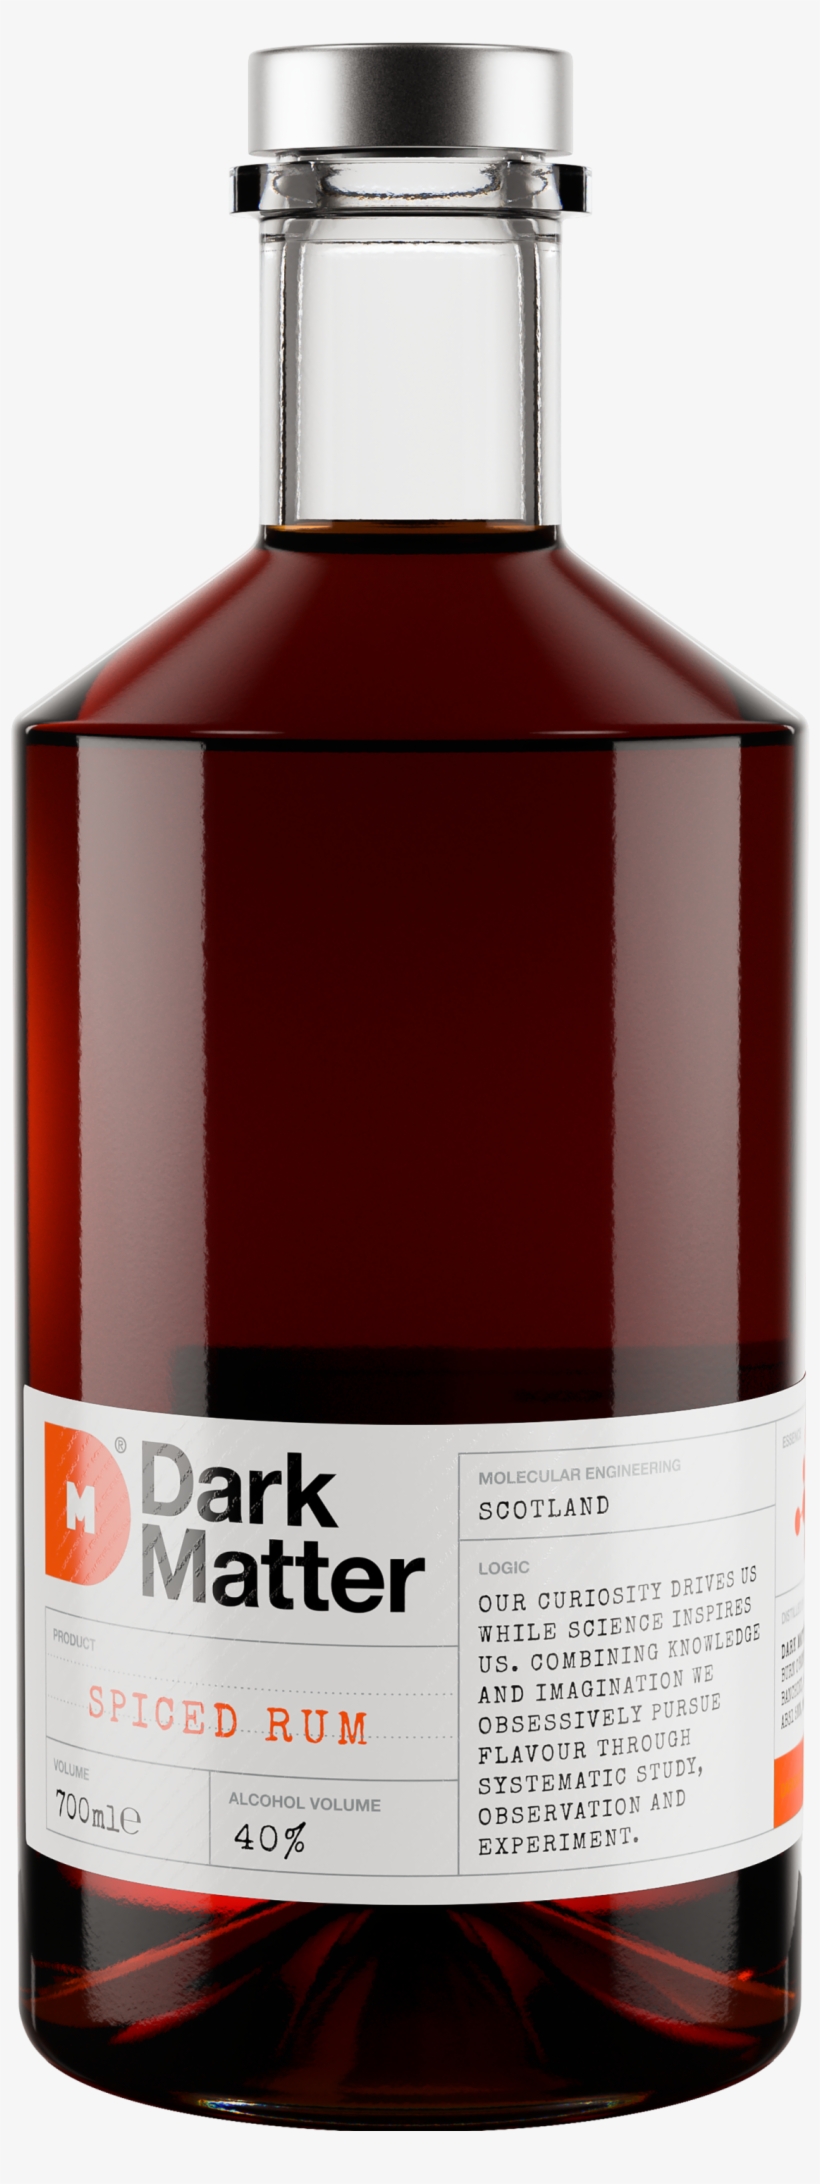 What We Did - Dark Matter Rum Bottle, transparent png #2917924